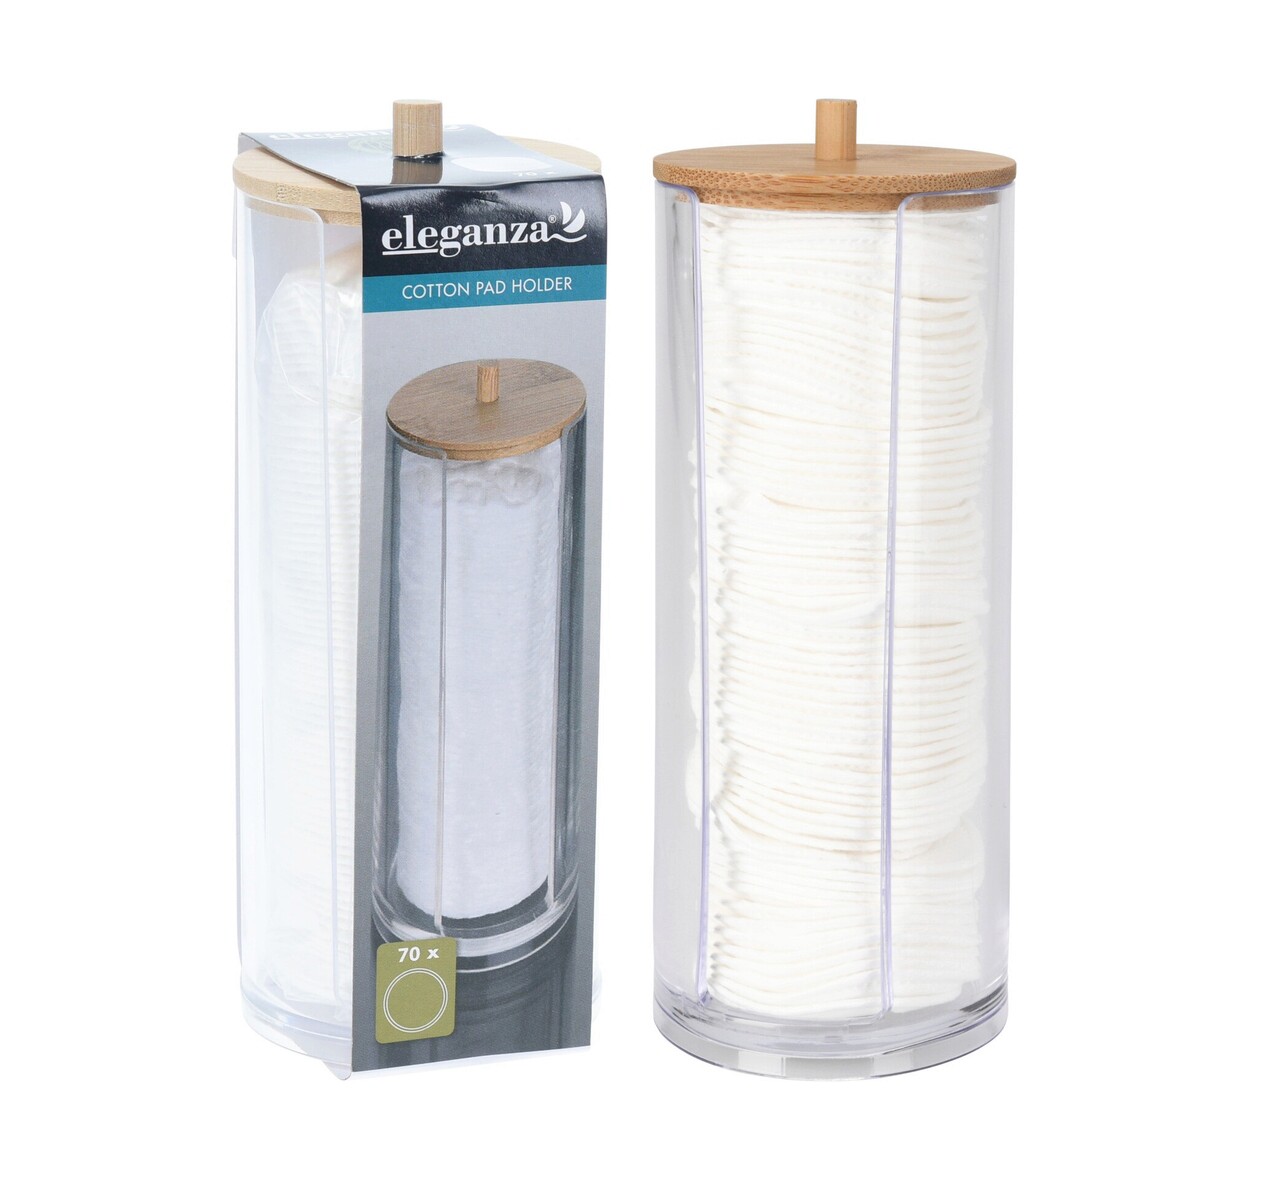 Suport pentru dischete demachiante Eleganza, 7x18.5 cm, 70 de dischete incluse, polistiren/capac din bambus